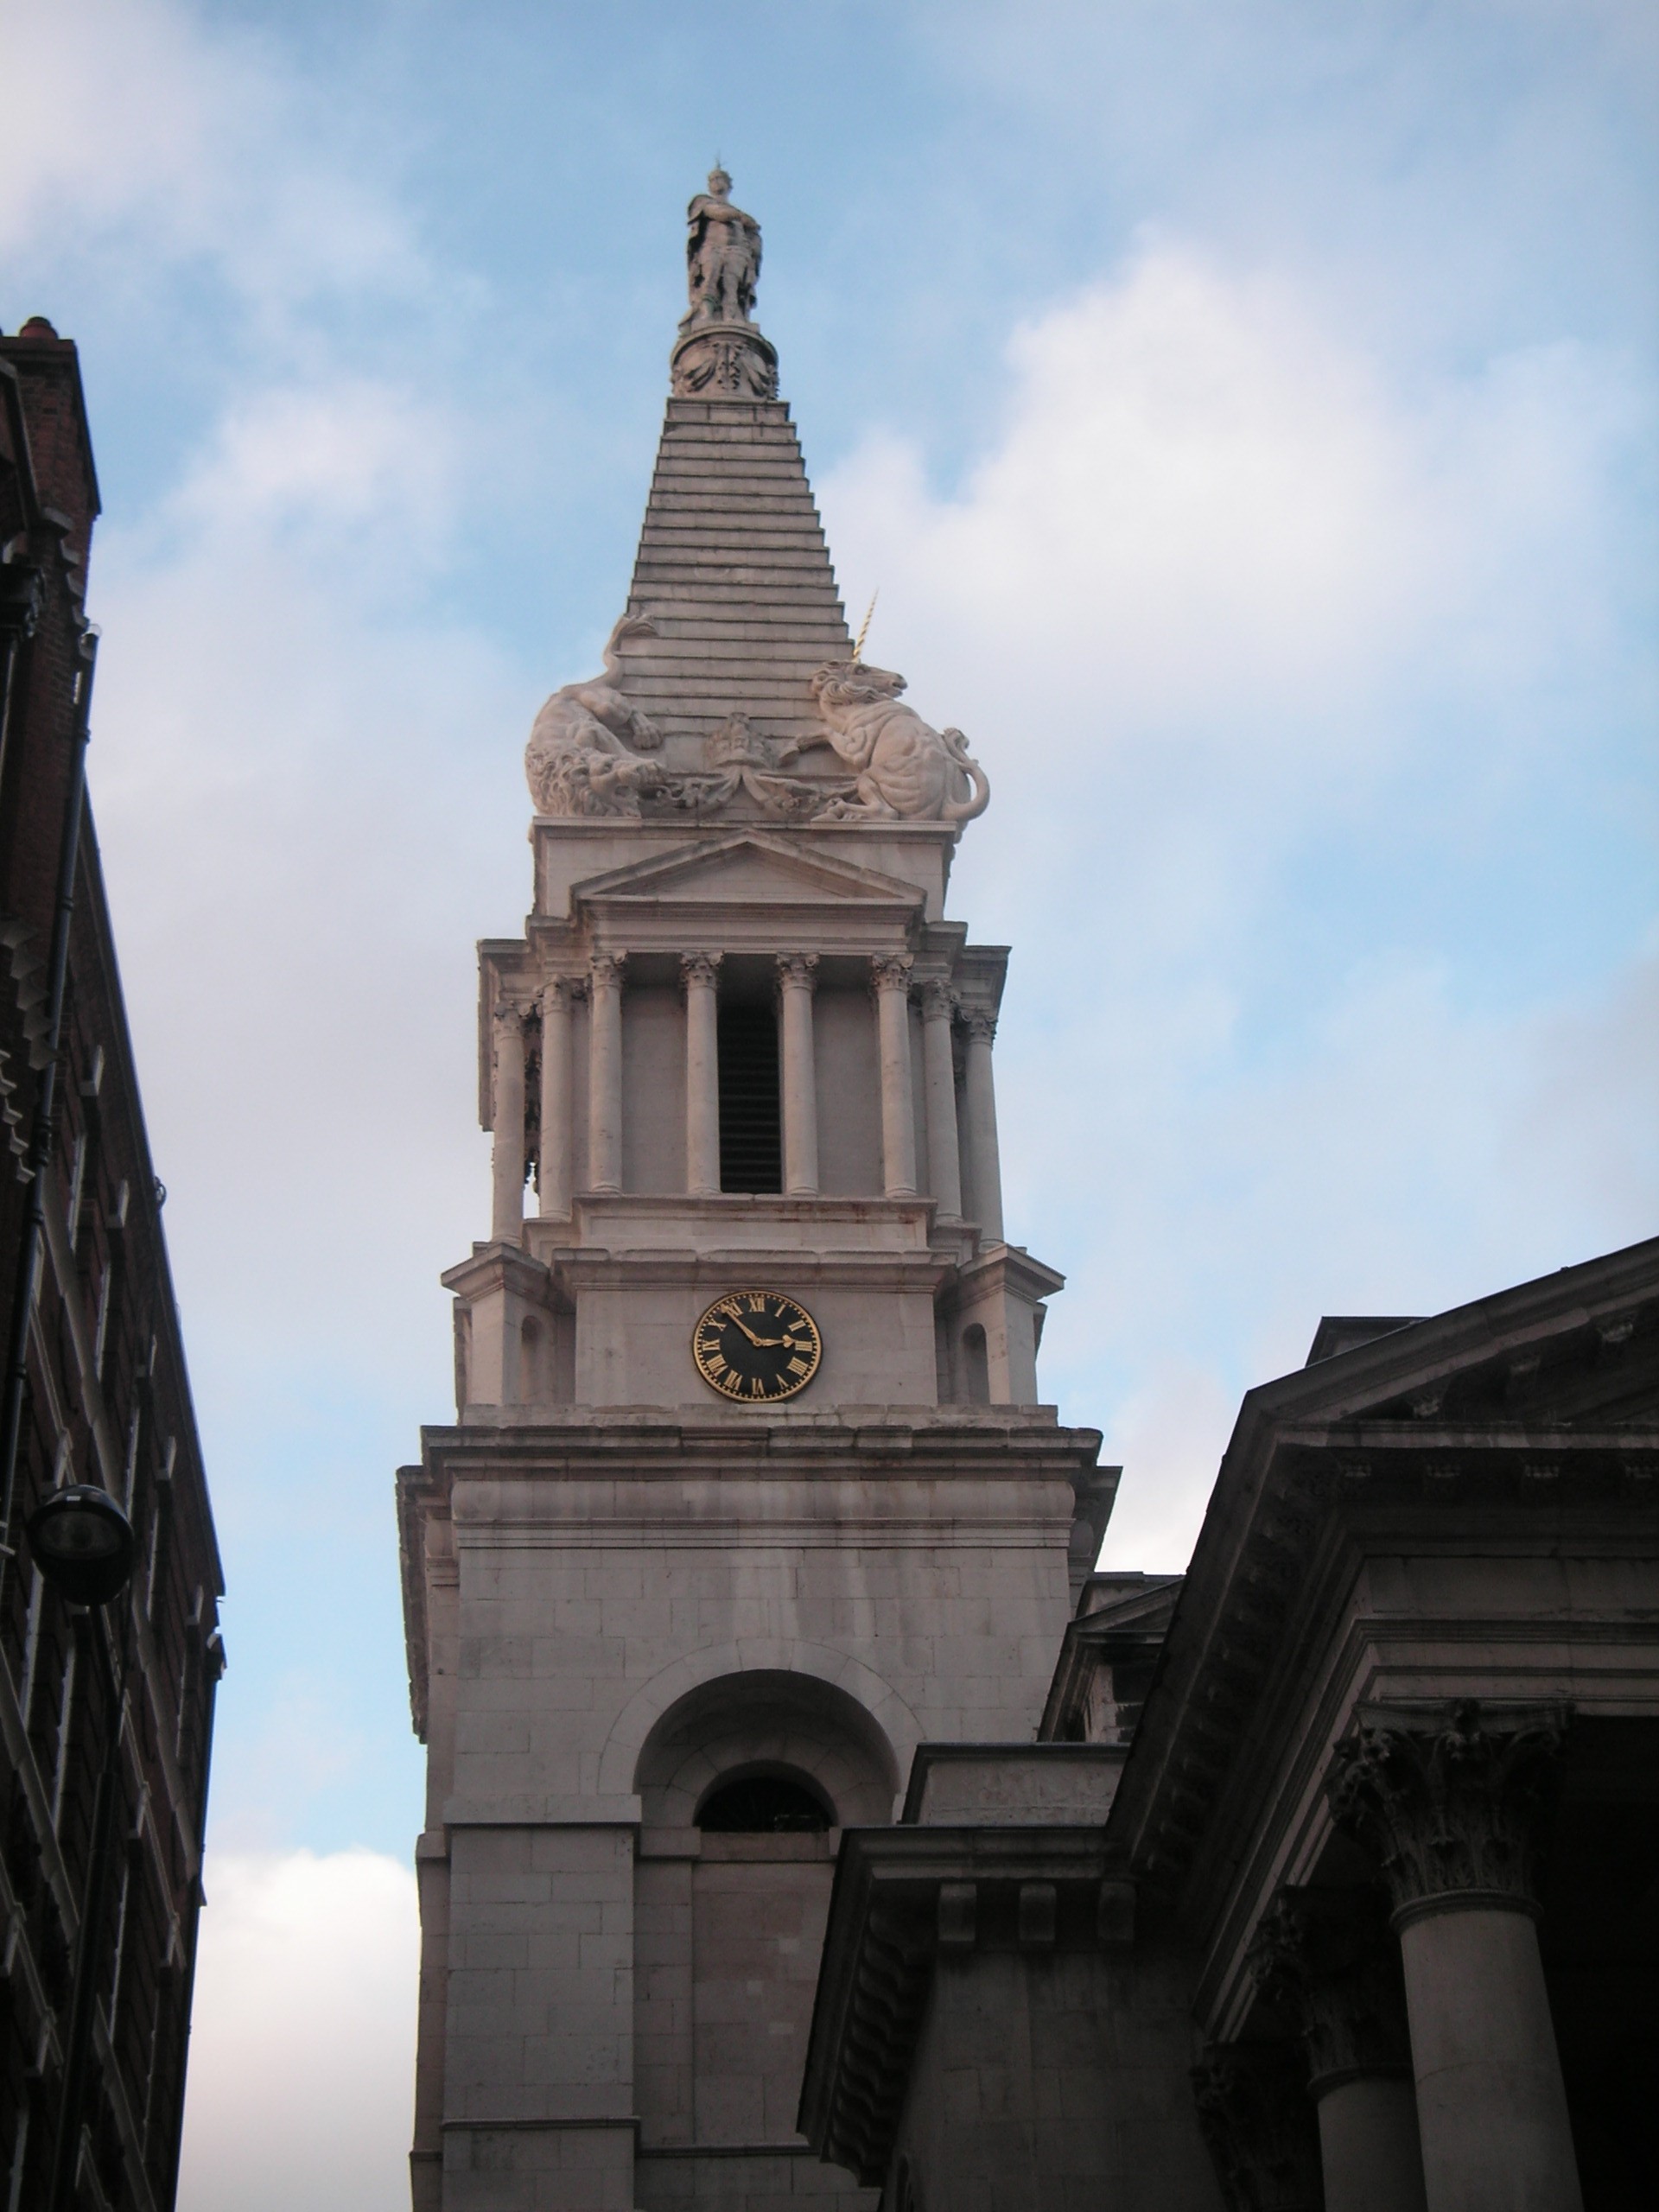 St. George's Church, Bloomsbury, London